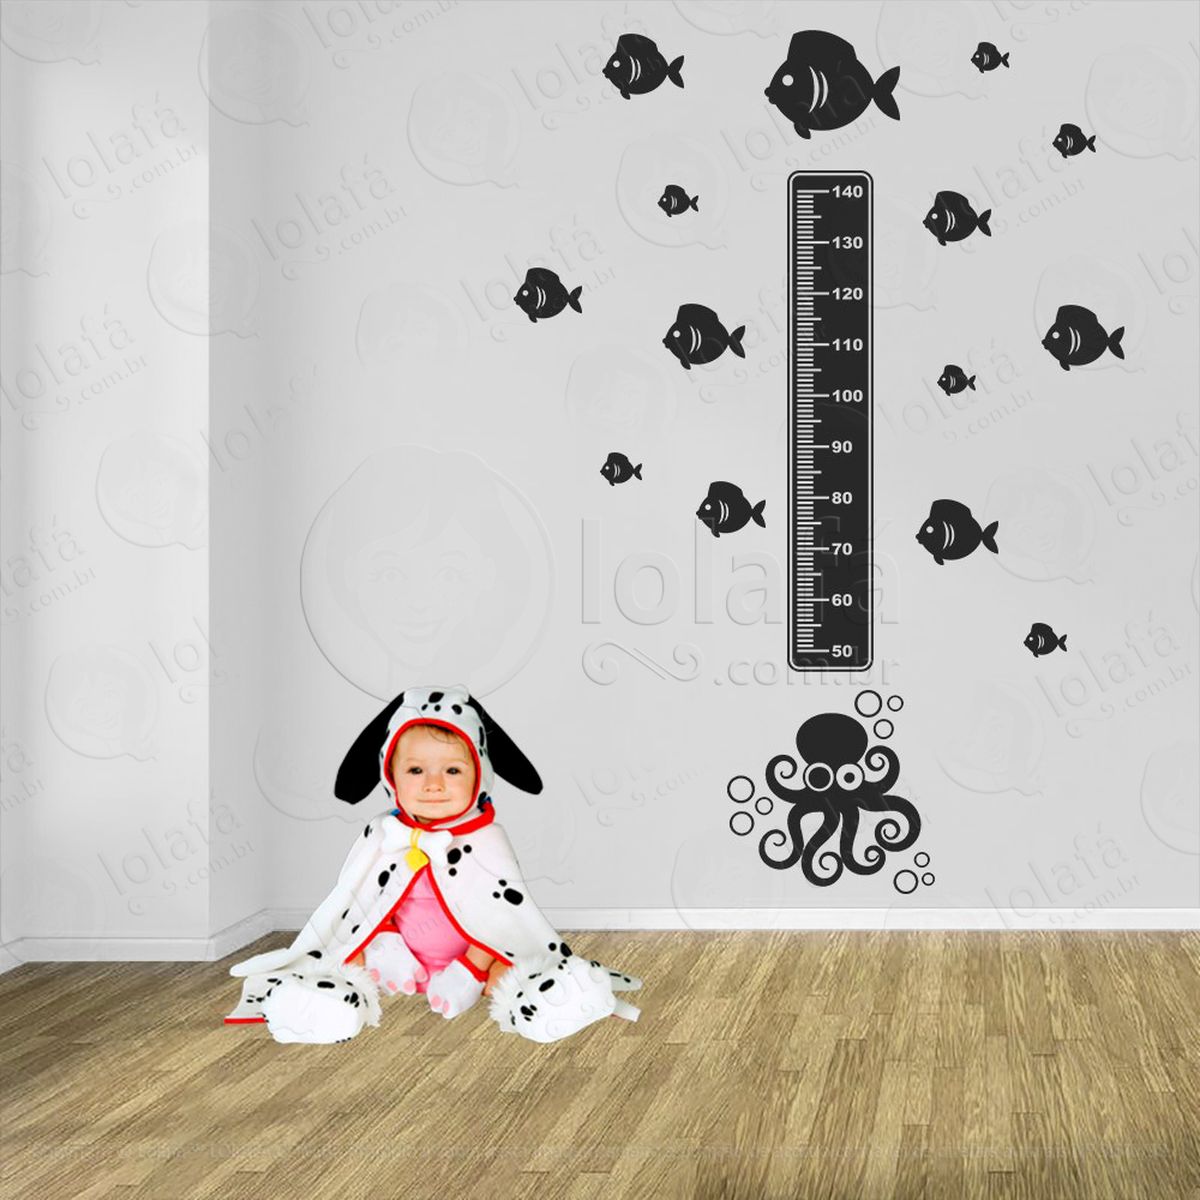 polvo e peixes adesivo régua de crescimento infantil, medidor de altura para quarto, porta e parede - mod:125